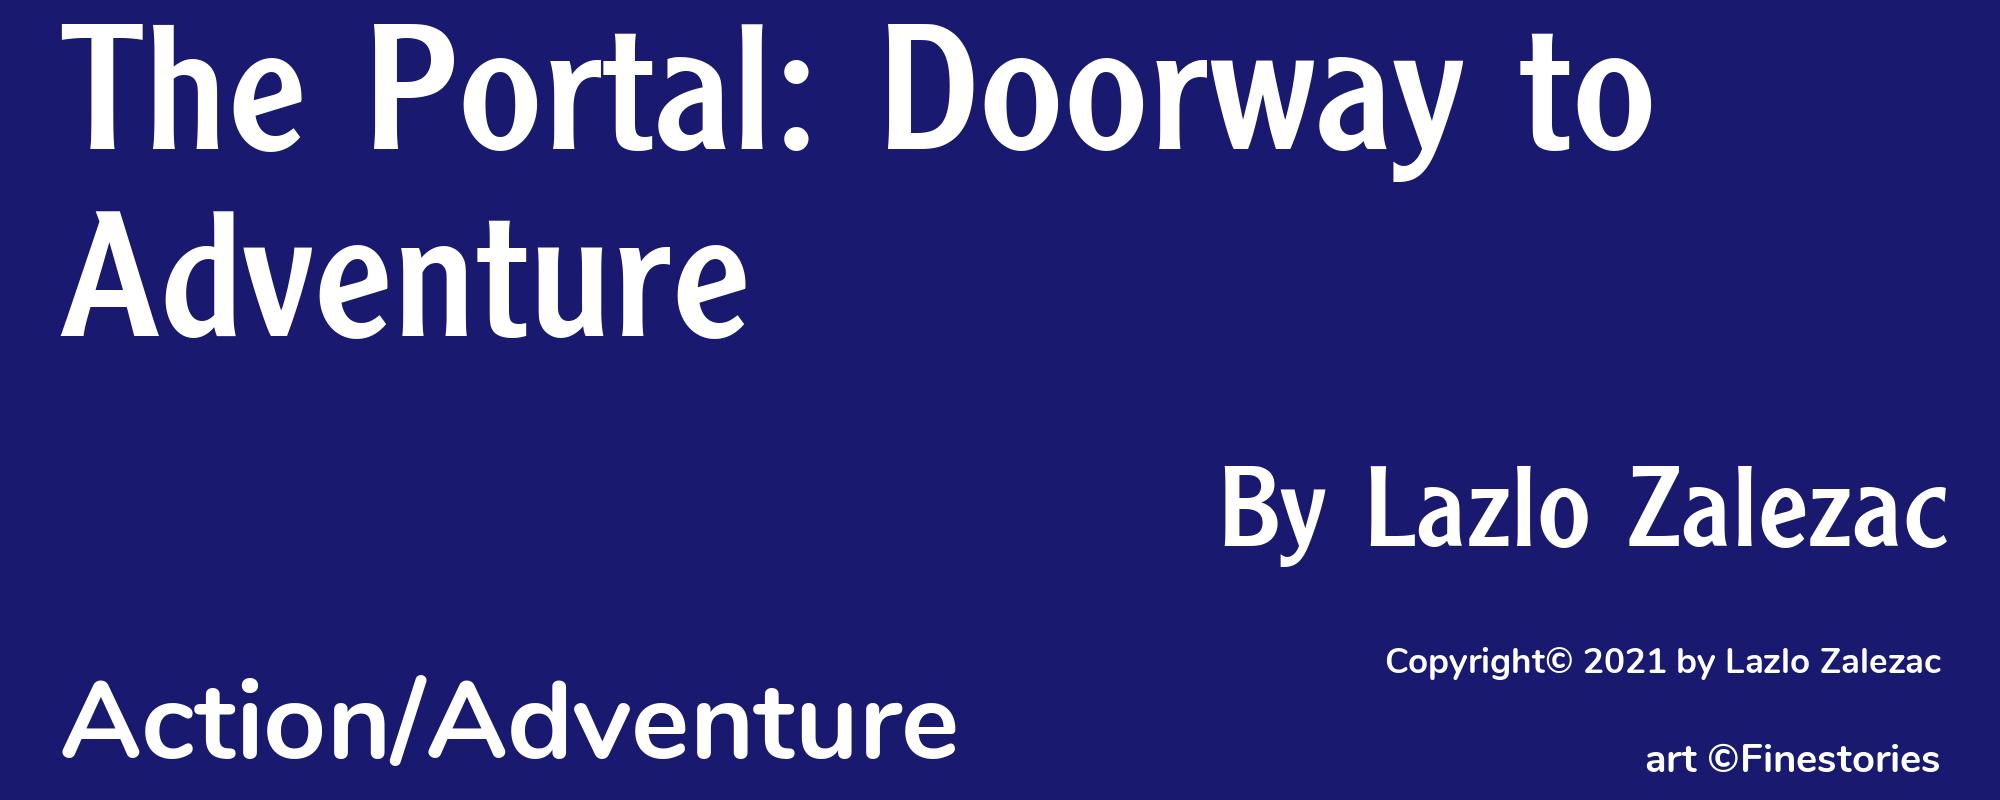 The Portal: Doorway to Adventure - Cover